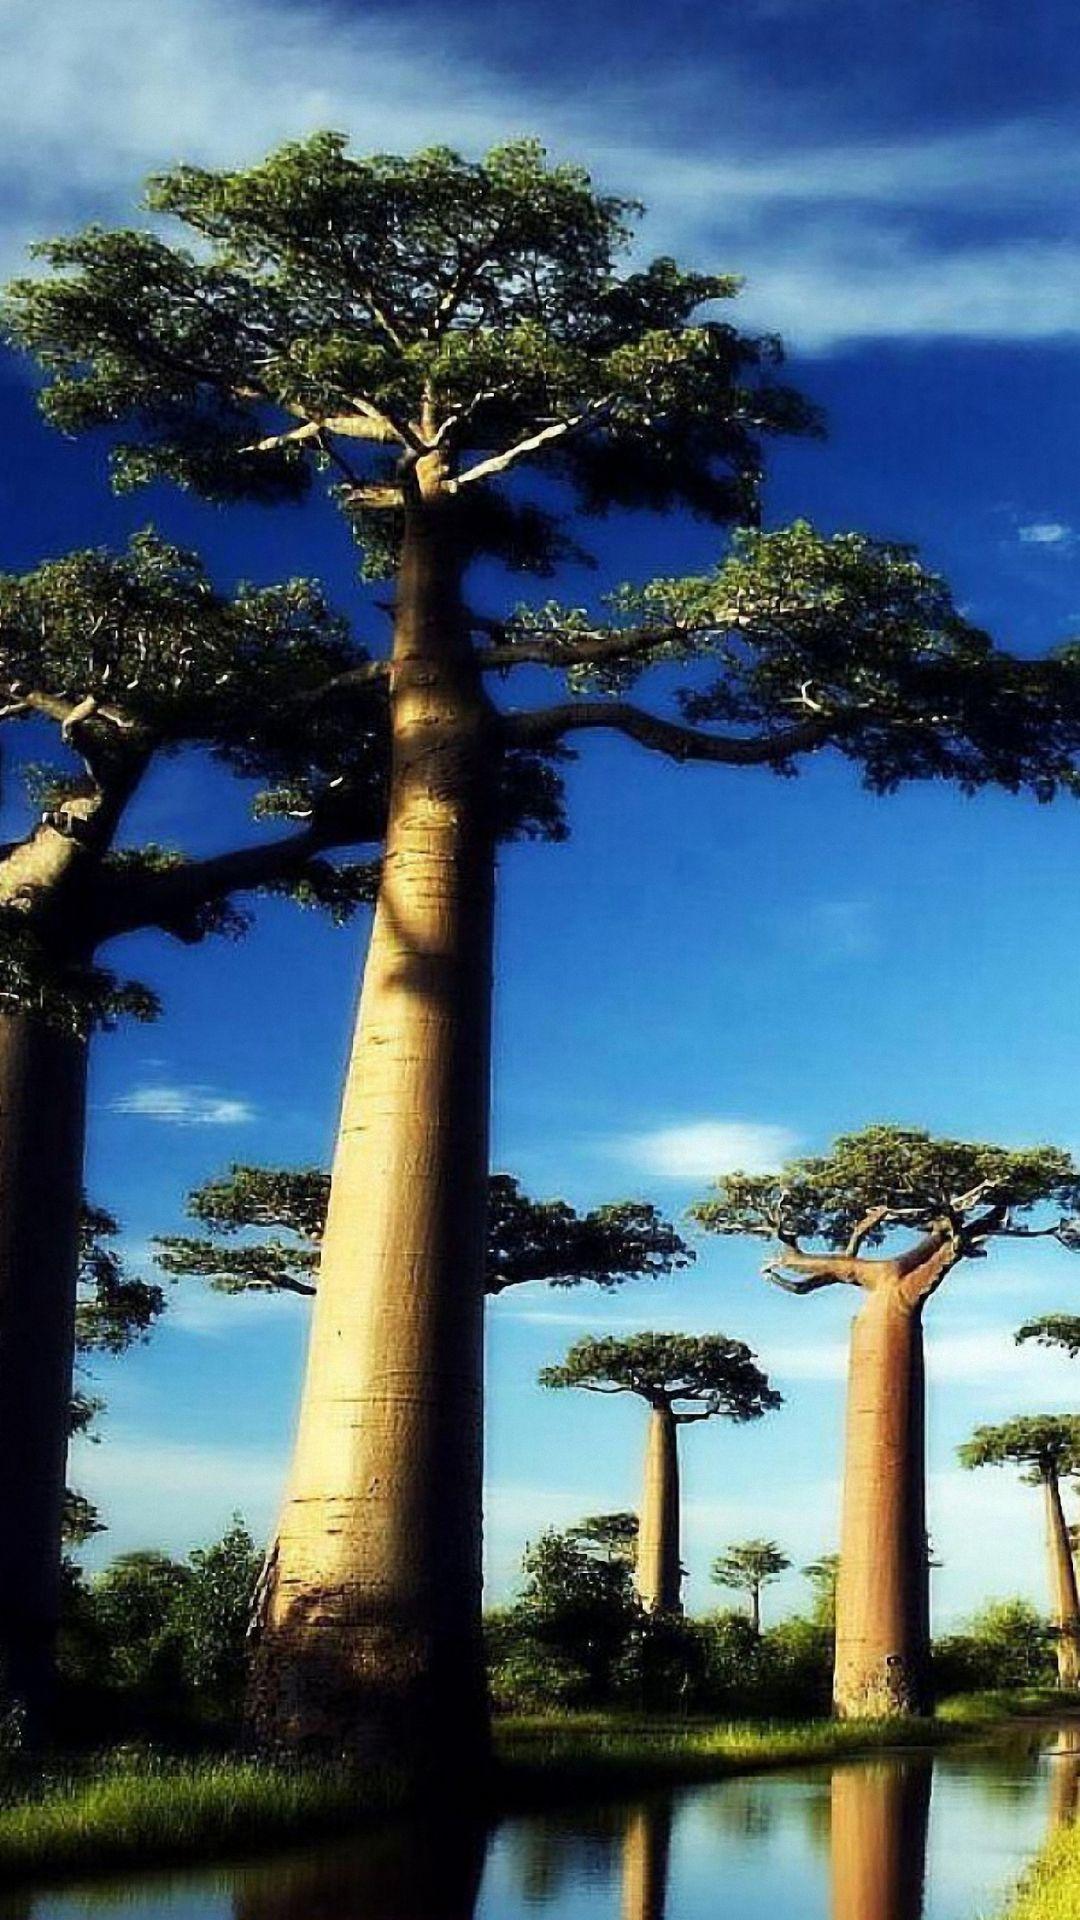 HD cool big tree iPhone 6 / 6s / 6s Plus wallpaper, nature mobile background download. Tree wallpaper iphone, Baobab tree, Big tree